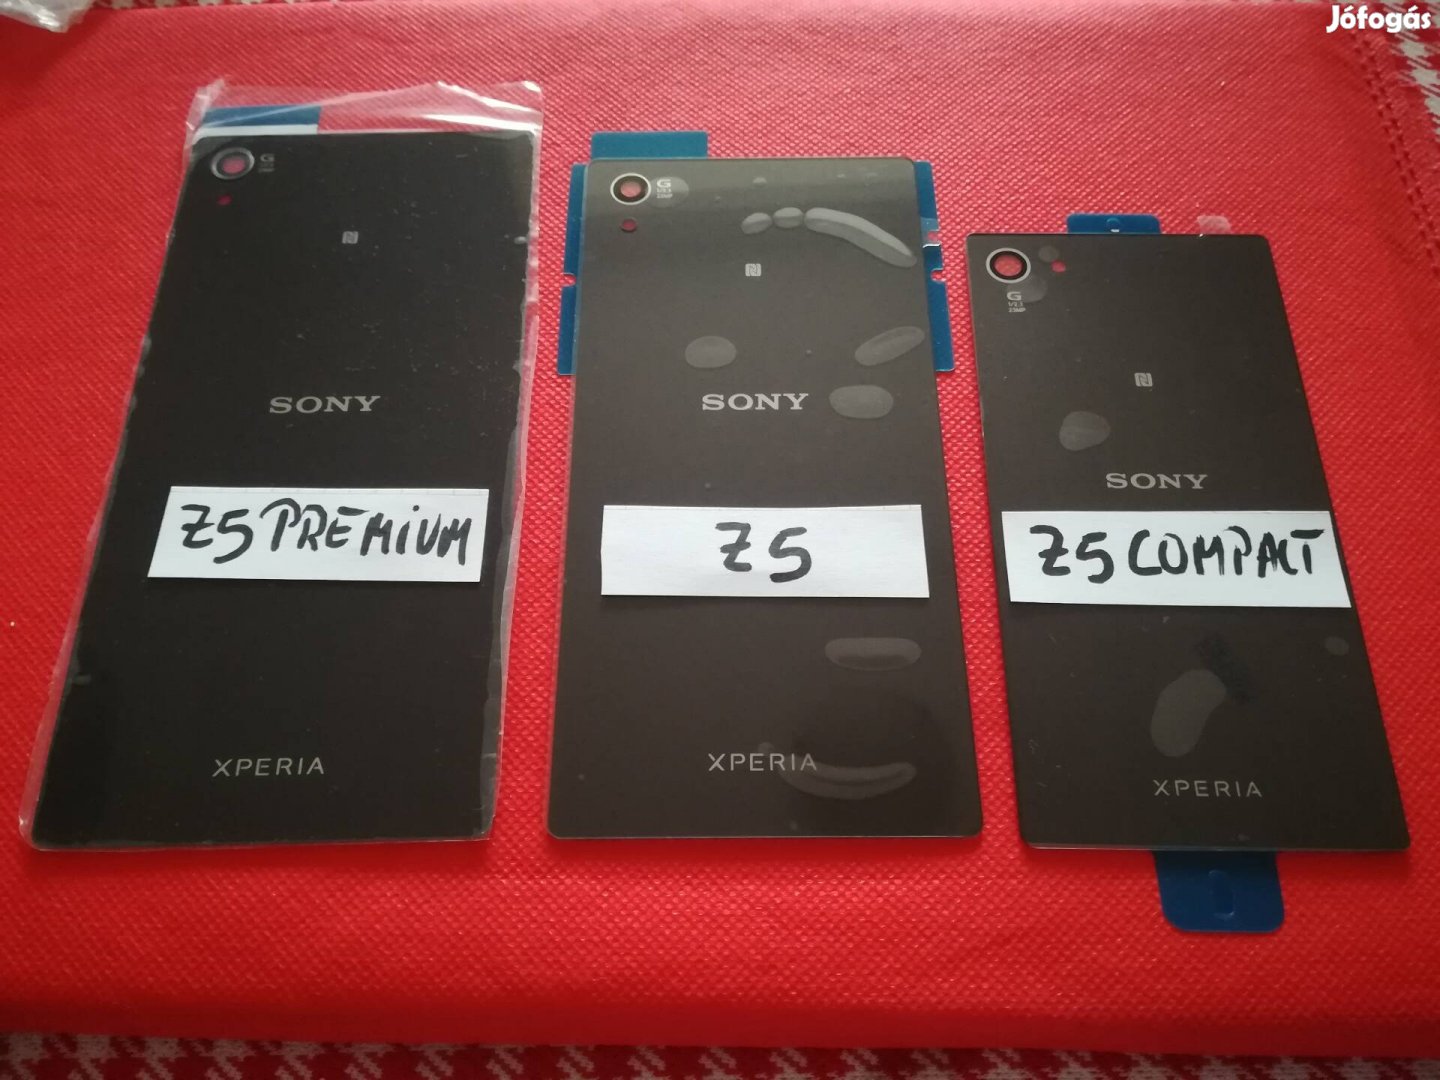 Sony xperia z5 prémium hátlap akkufedél 